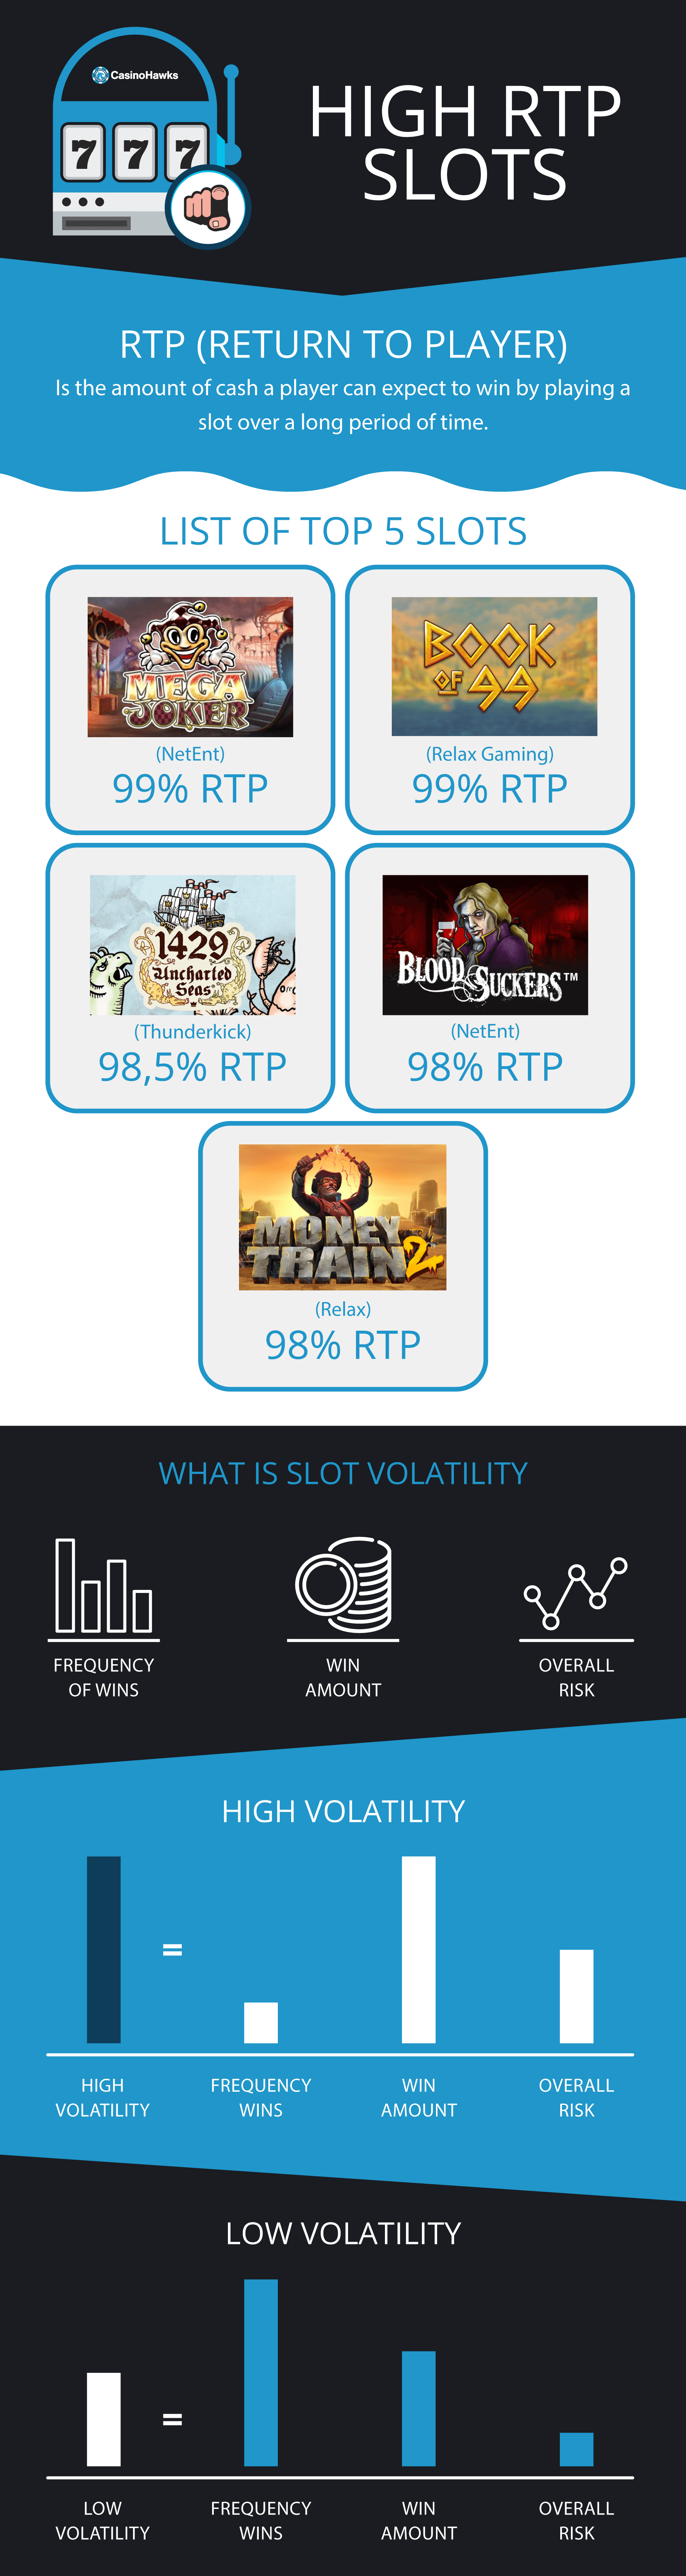 high RTP slots infographic